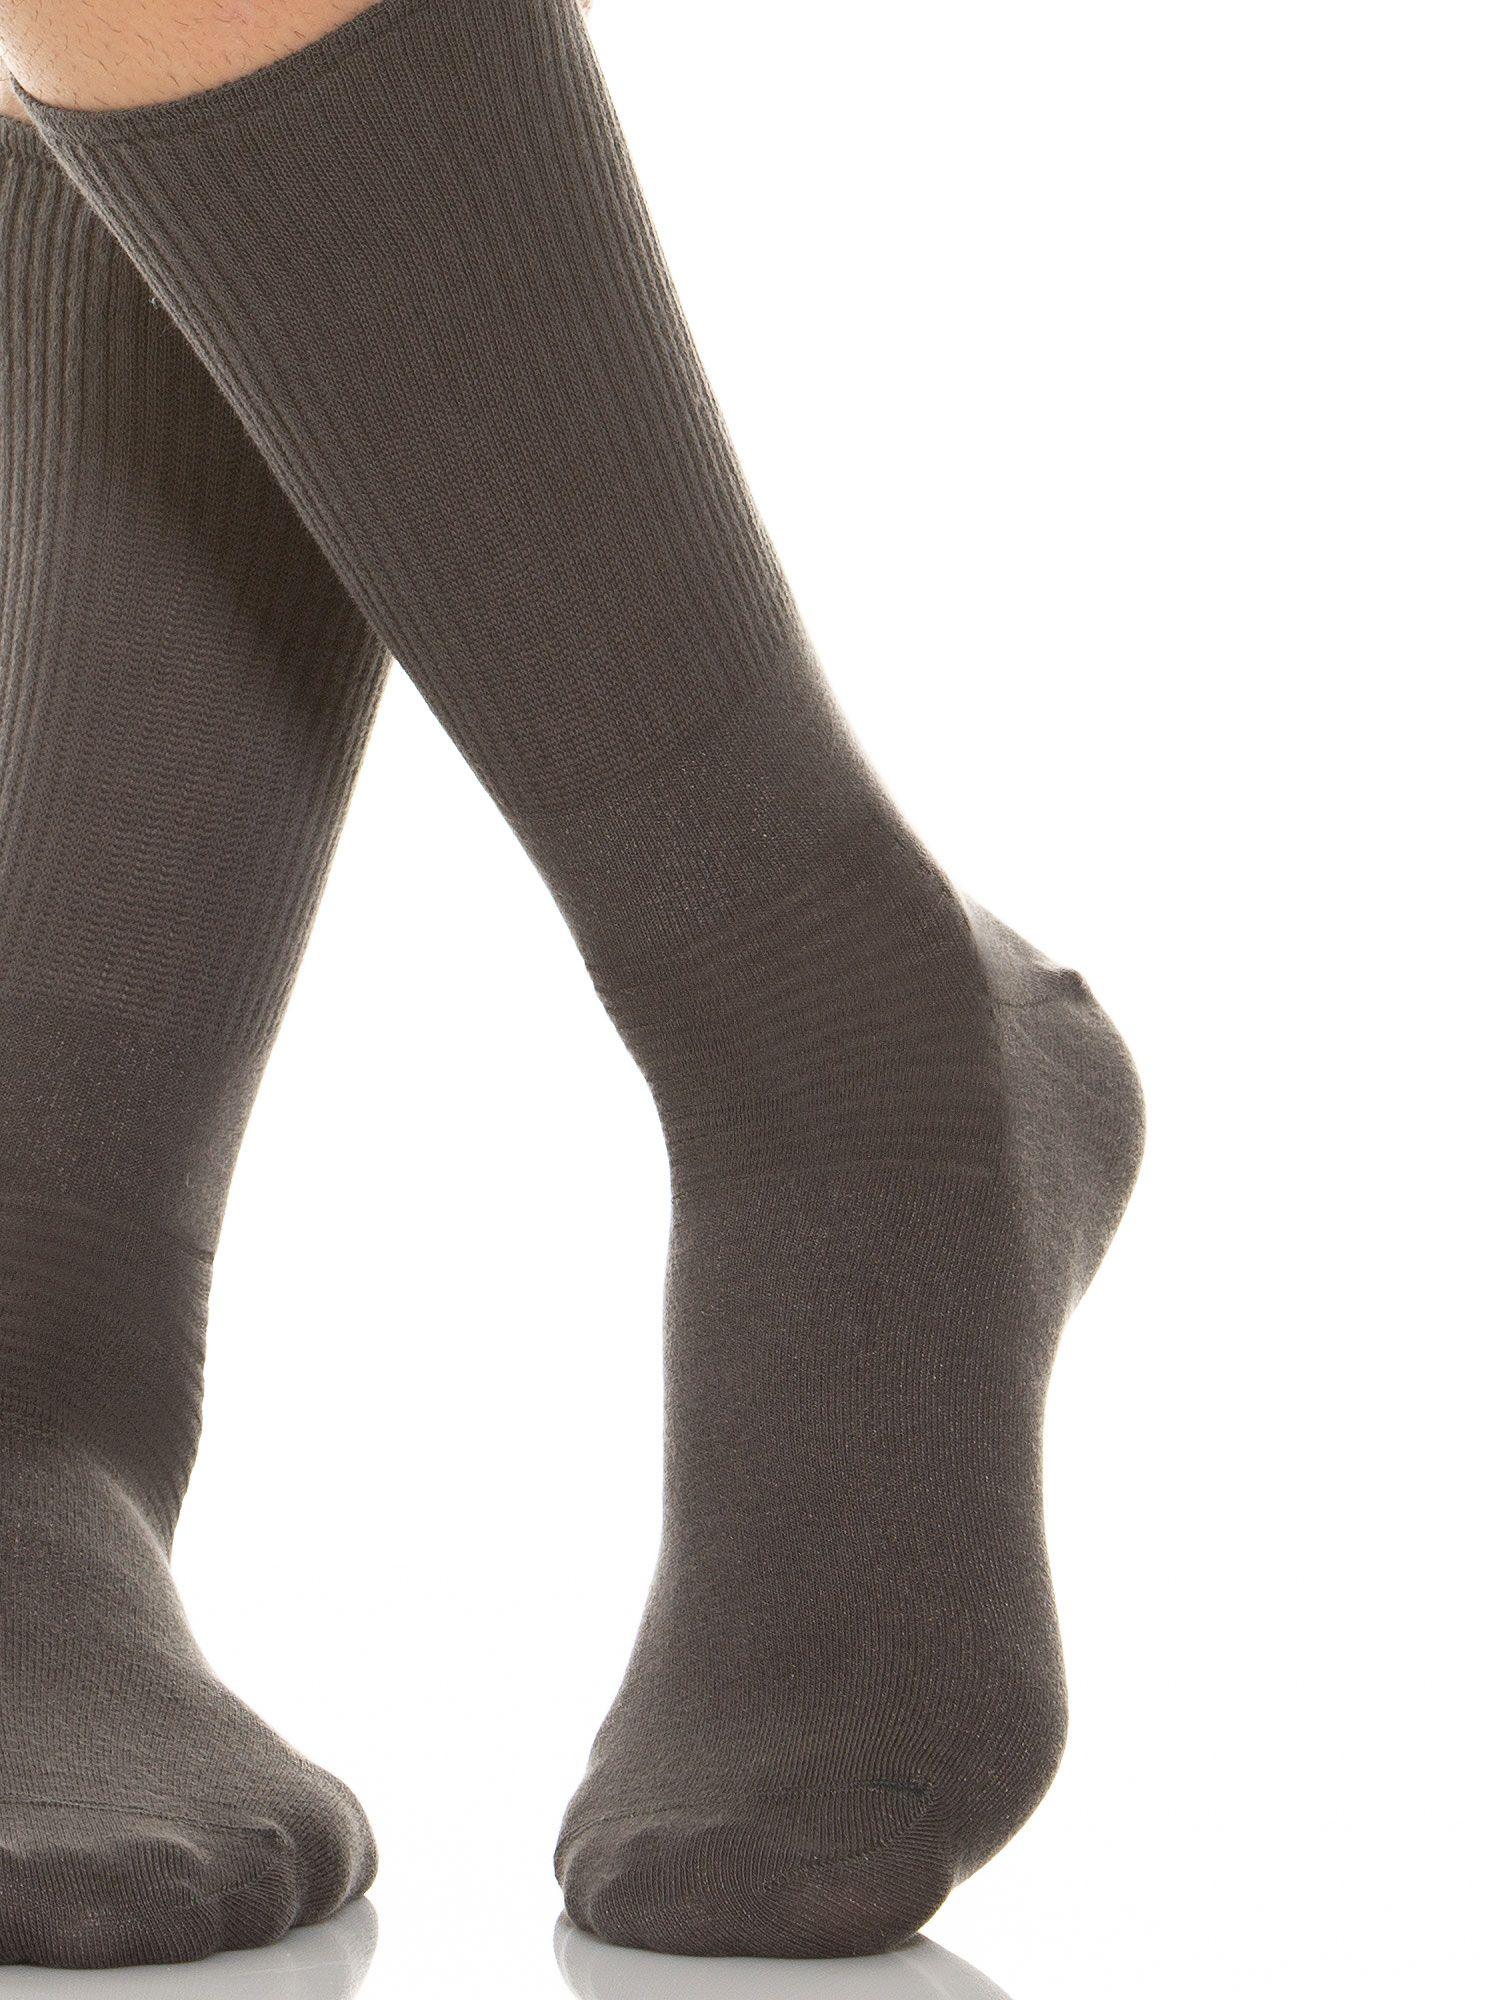 Buy Diabetic socks with X-Static Silver fibre – Wellness Shoppee